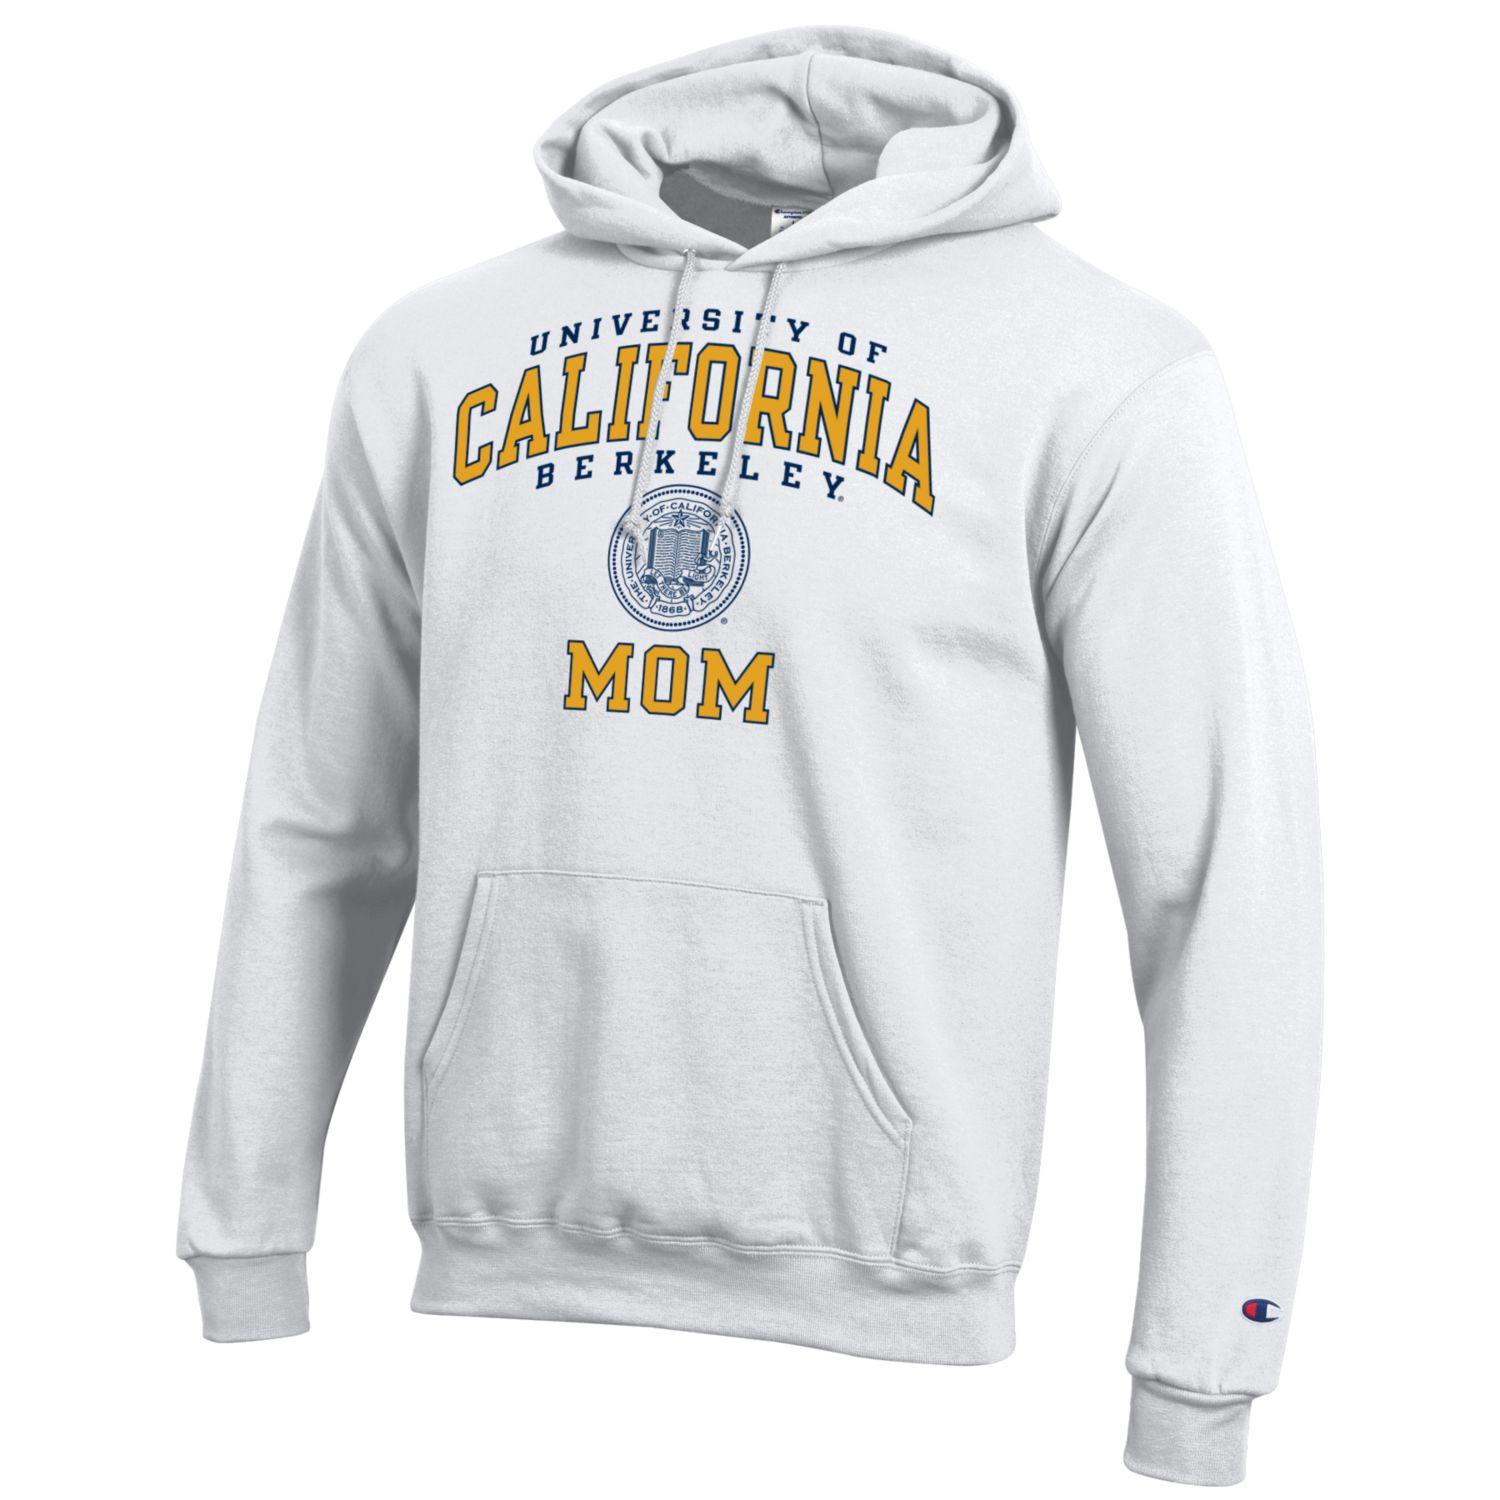 U.C. Berkeley Mom three arch hoodie sweatshirt-White